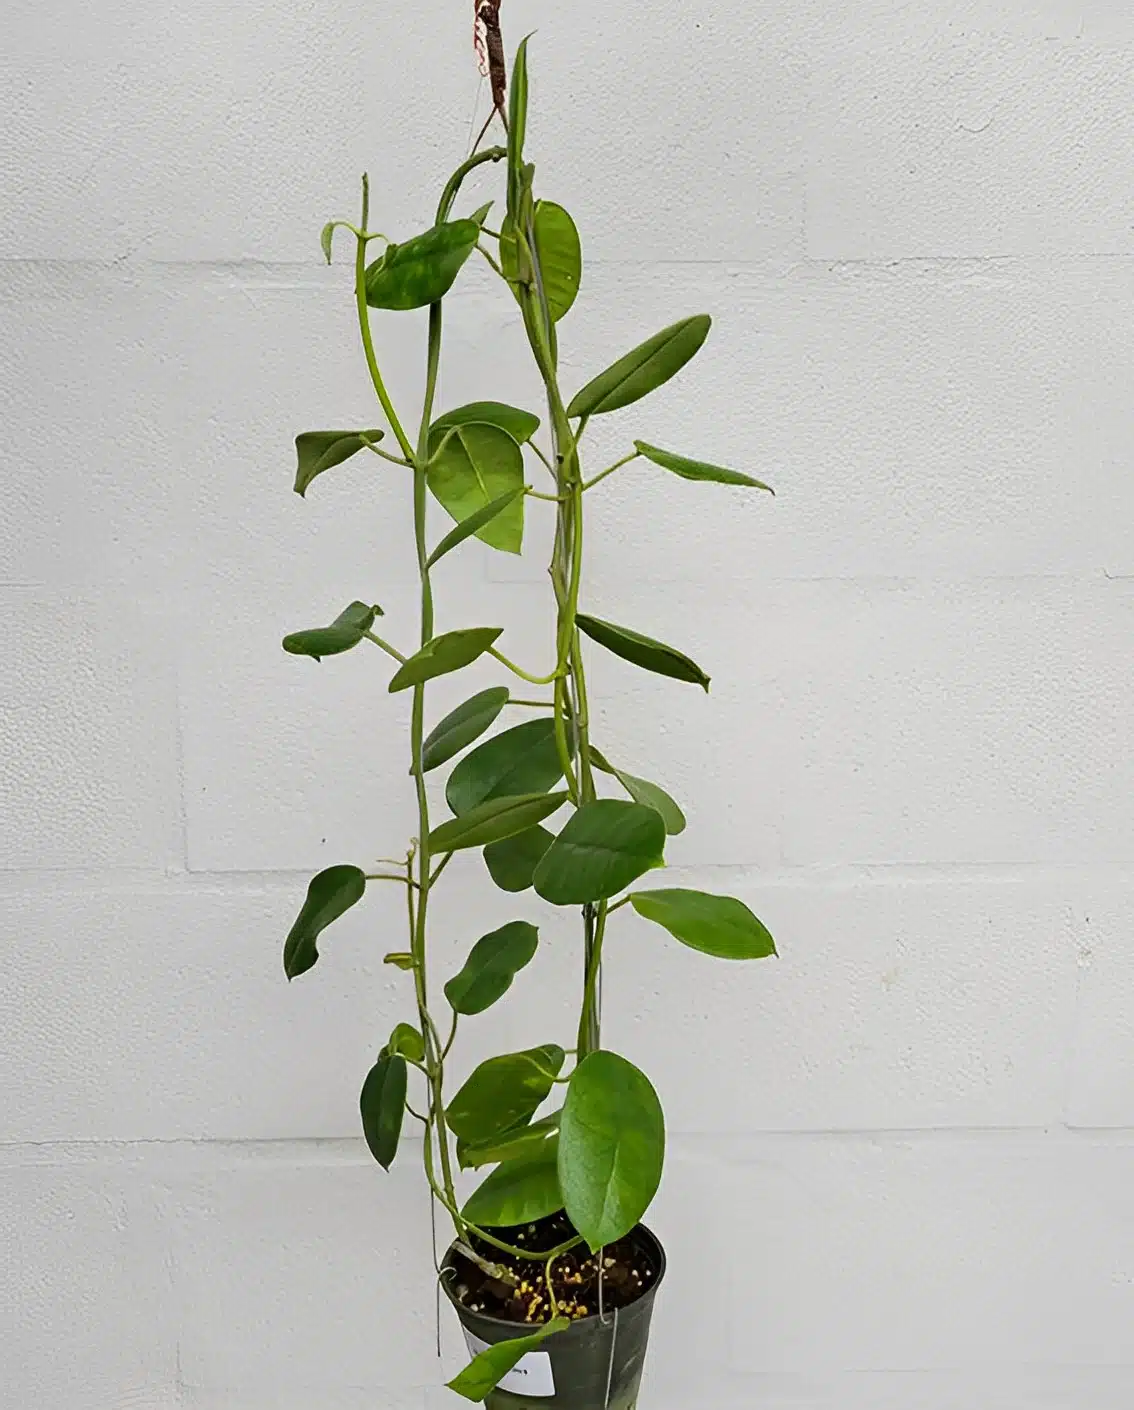 Hoya obtusifoloides - large plant for sale